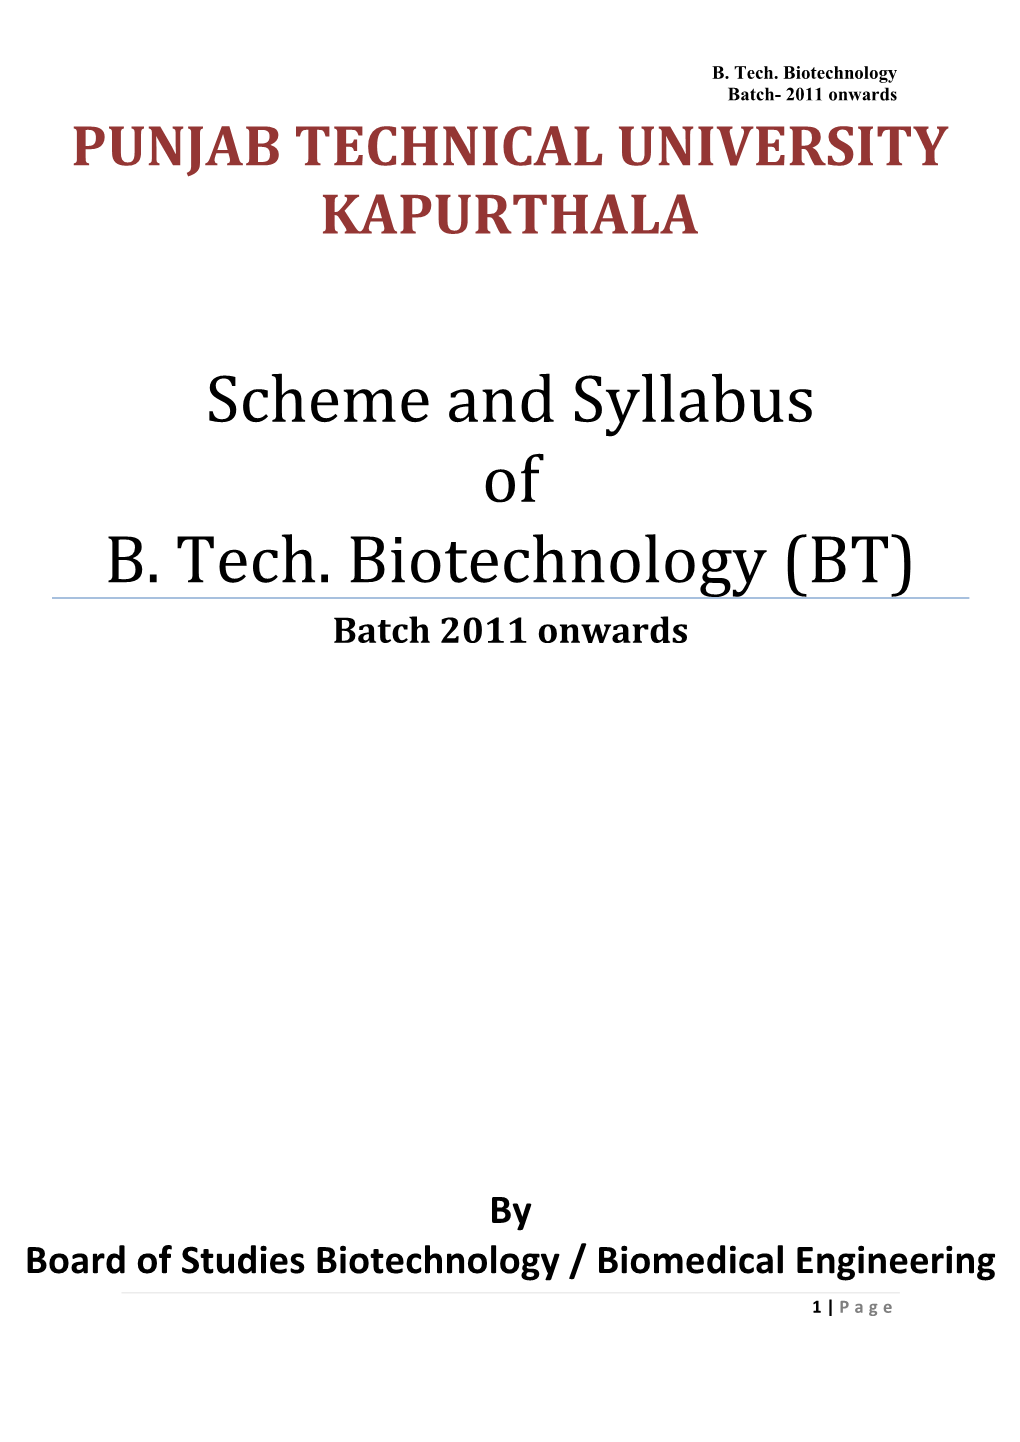 Scheme and Syllabus of B. Tech. Biotechnology (BT) Batch 2011 Onwards